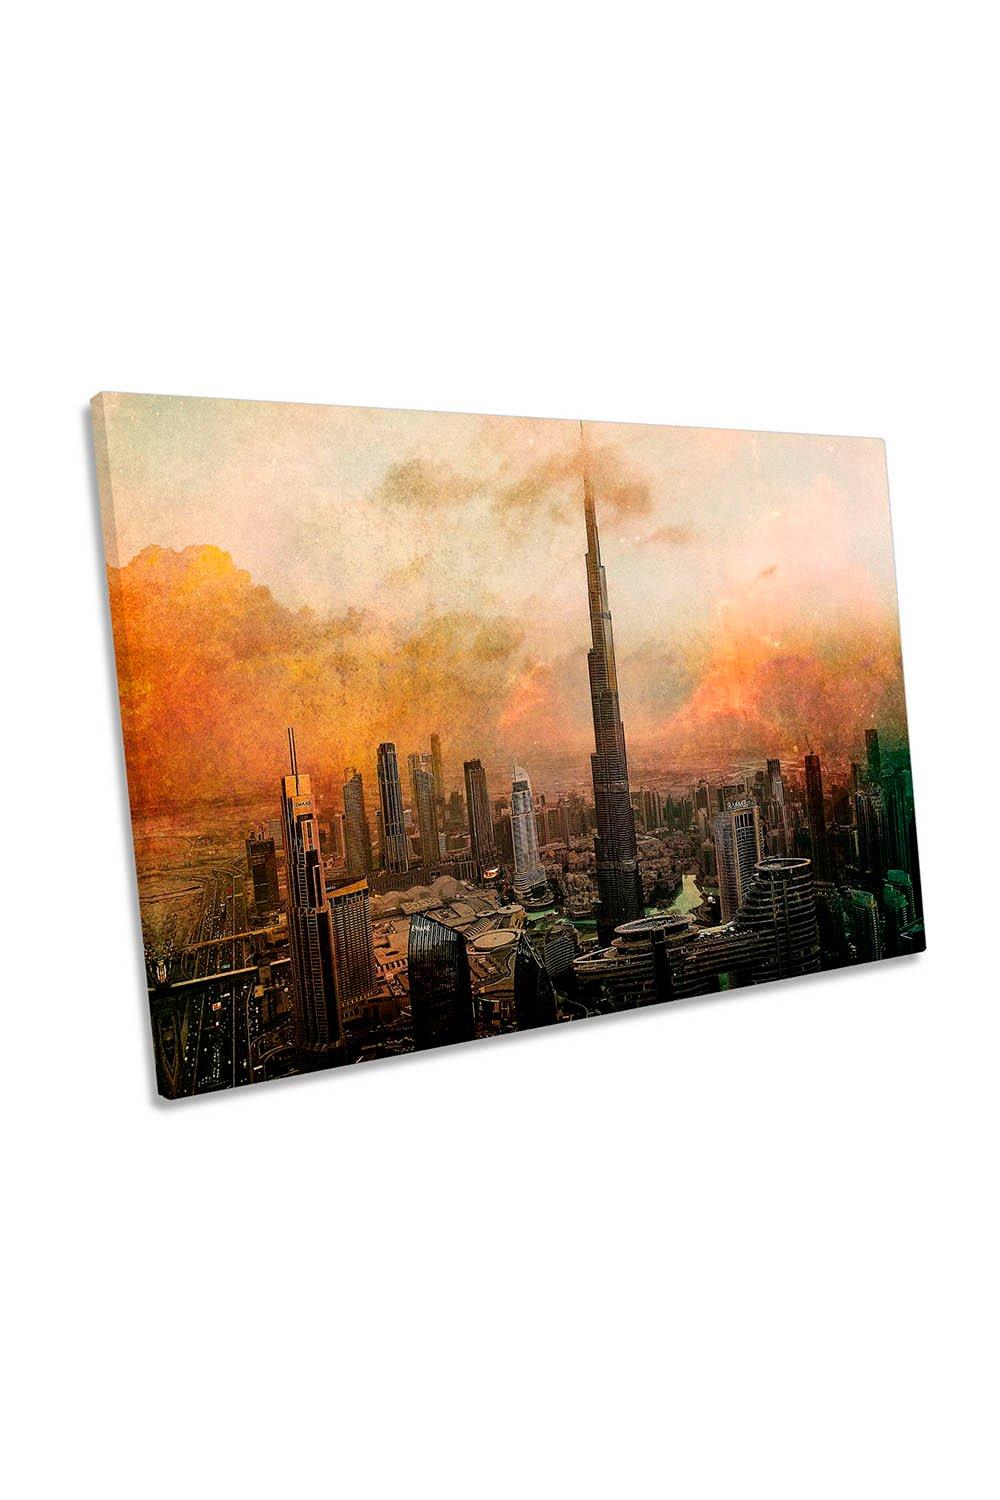 Burj Khalifa Dubai City Distressed Canvas Wall Art Picture Print